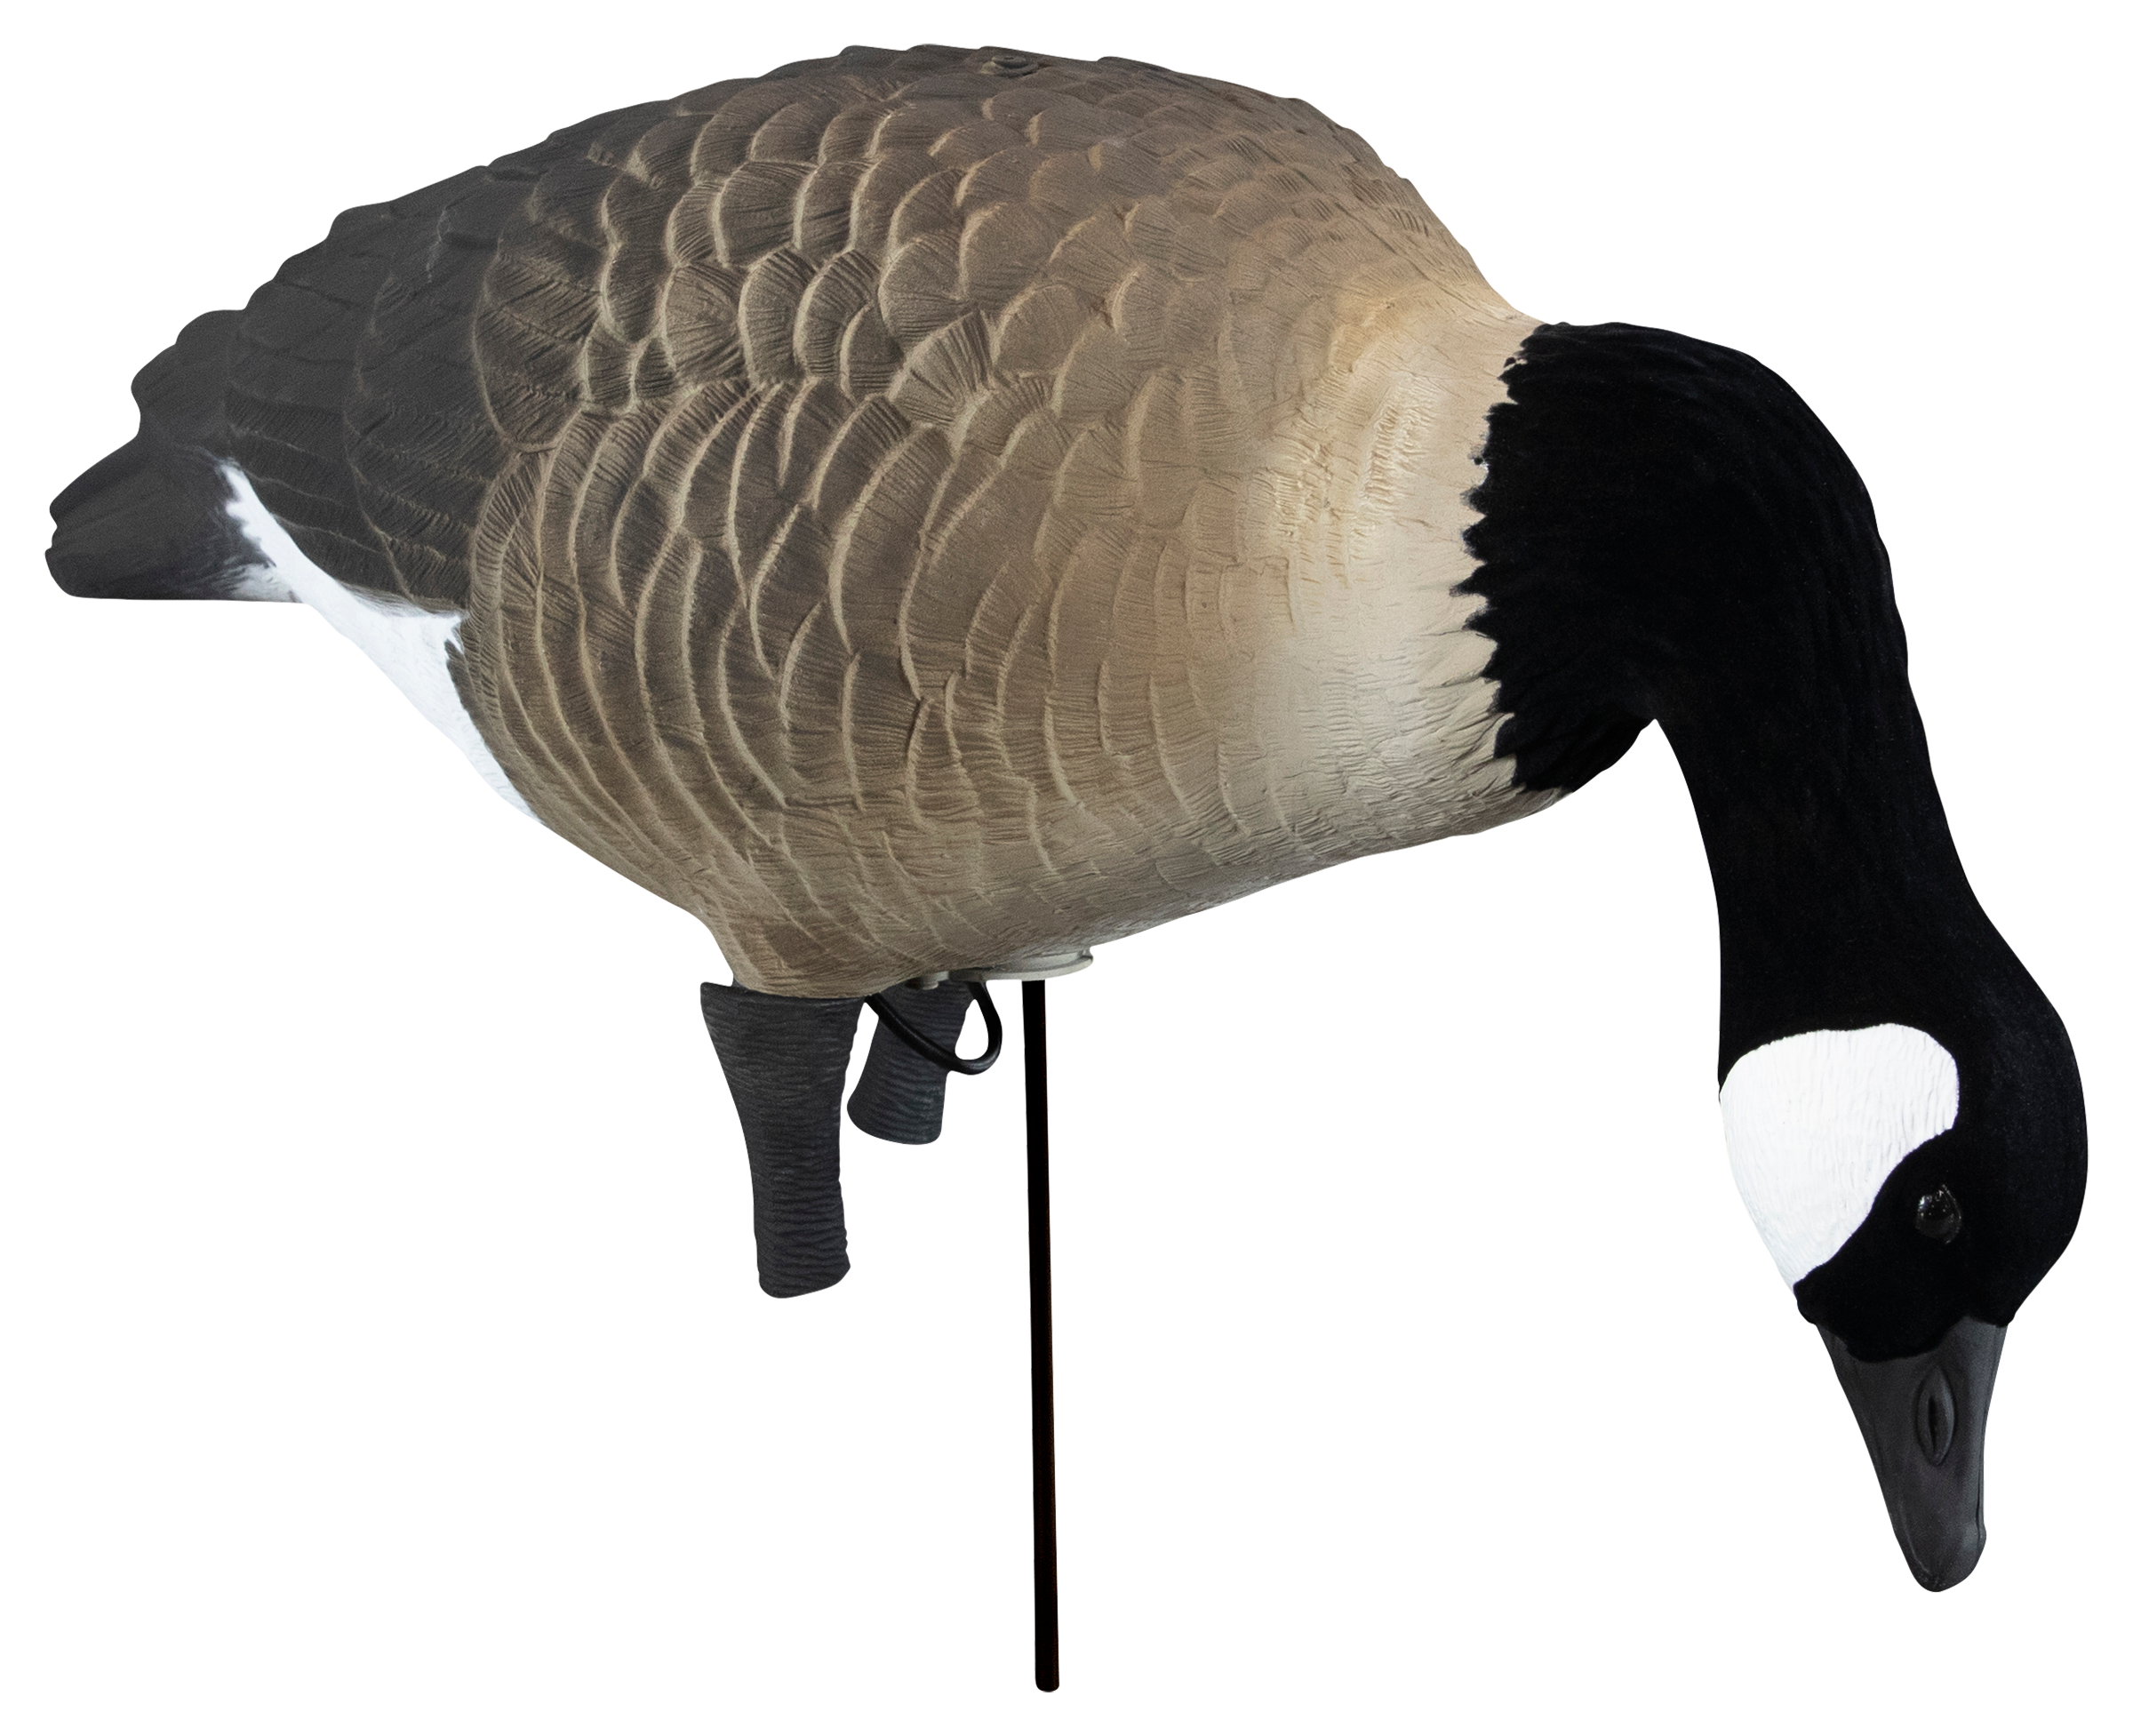 Higdon Outdoors Apex Full Body Trufeeder Canada Goose Decoys